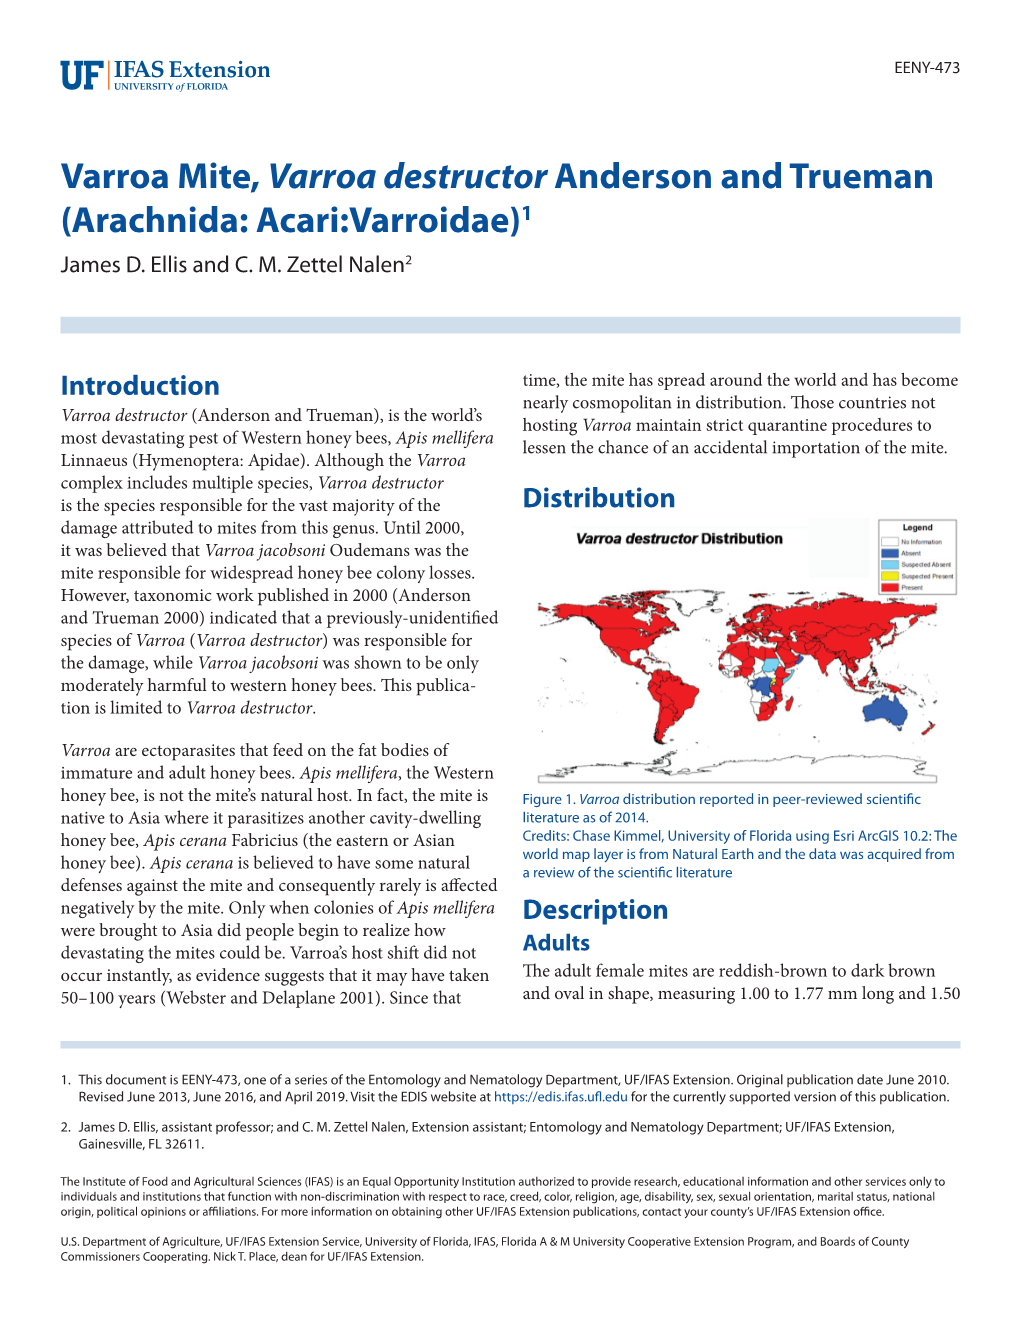 Varroa Mite, Varroa Destructor Anderson and Trueman (Arachnida: Acari:Varroidae)1 James D